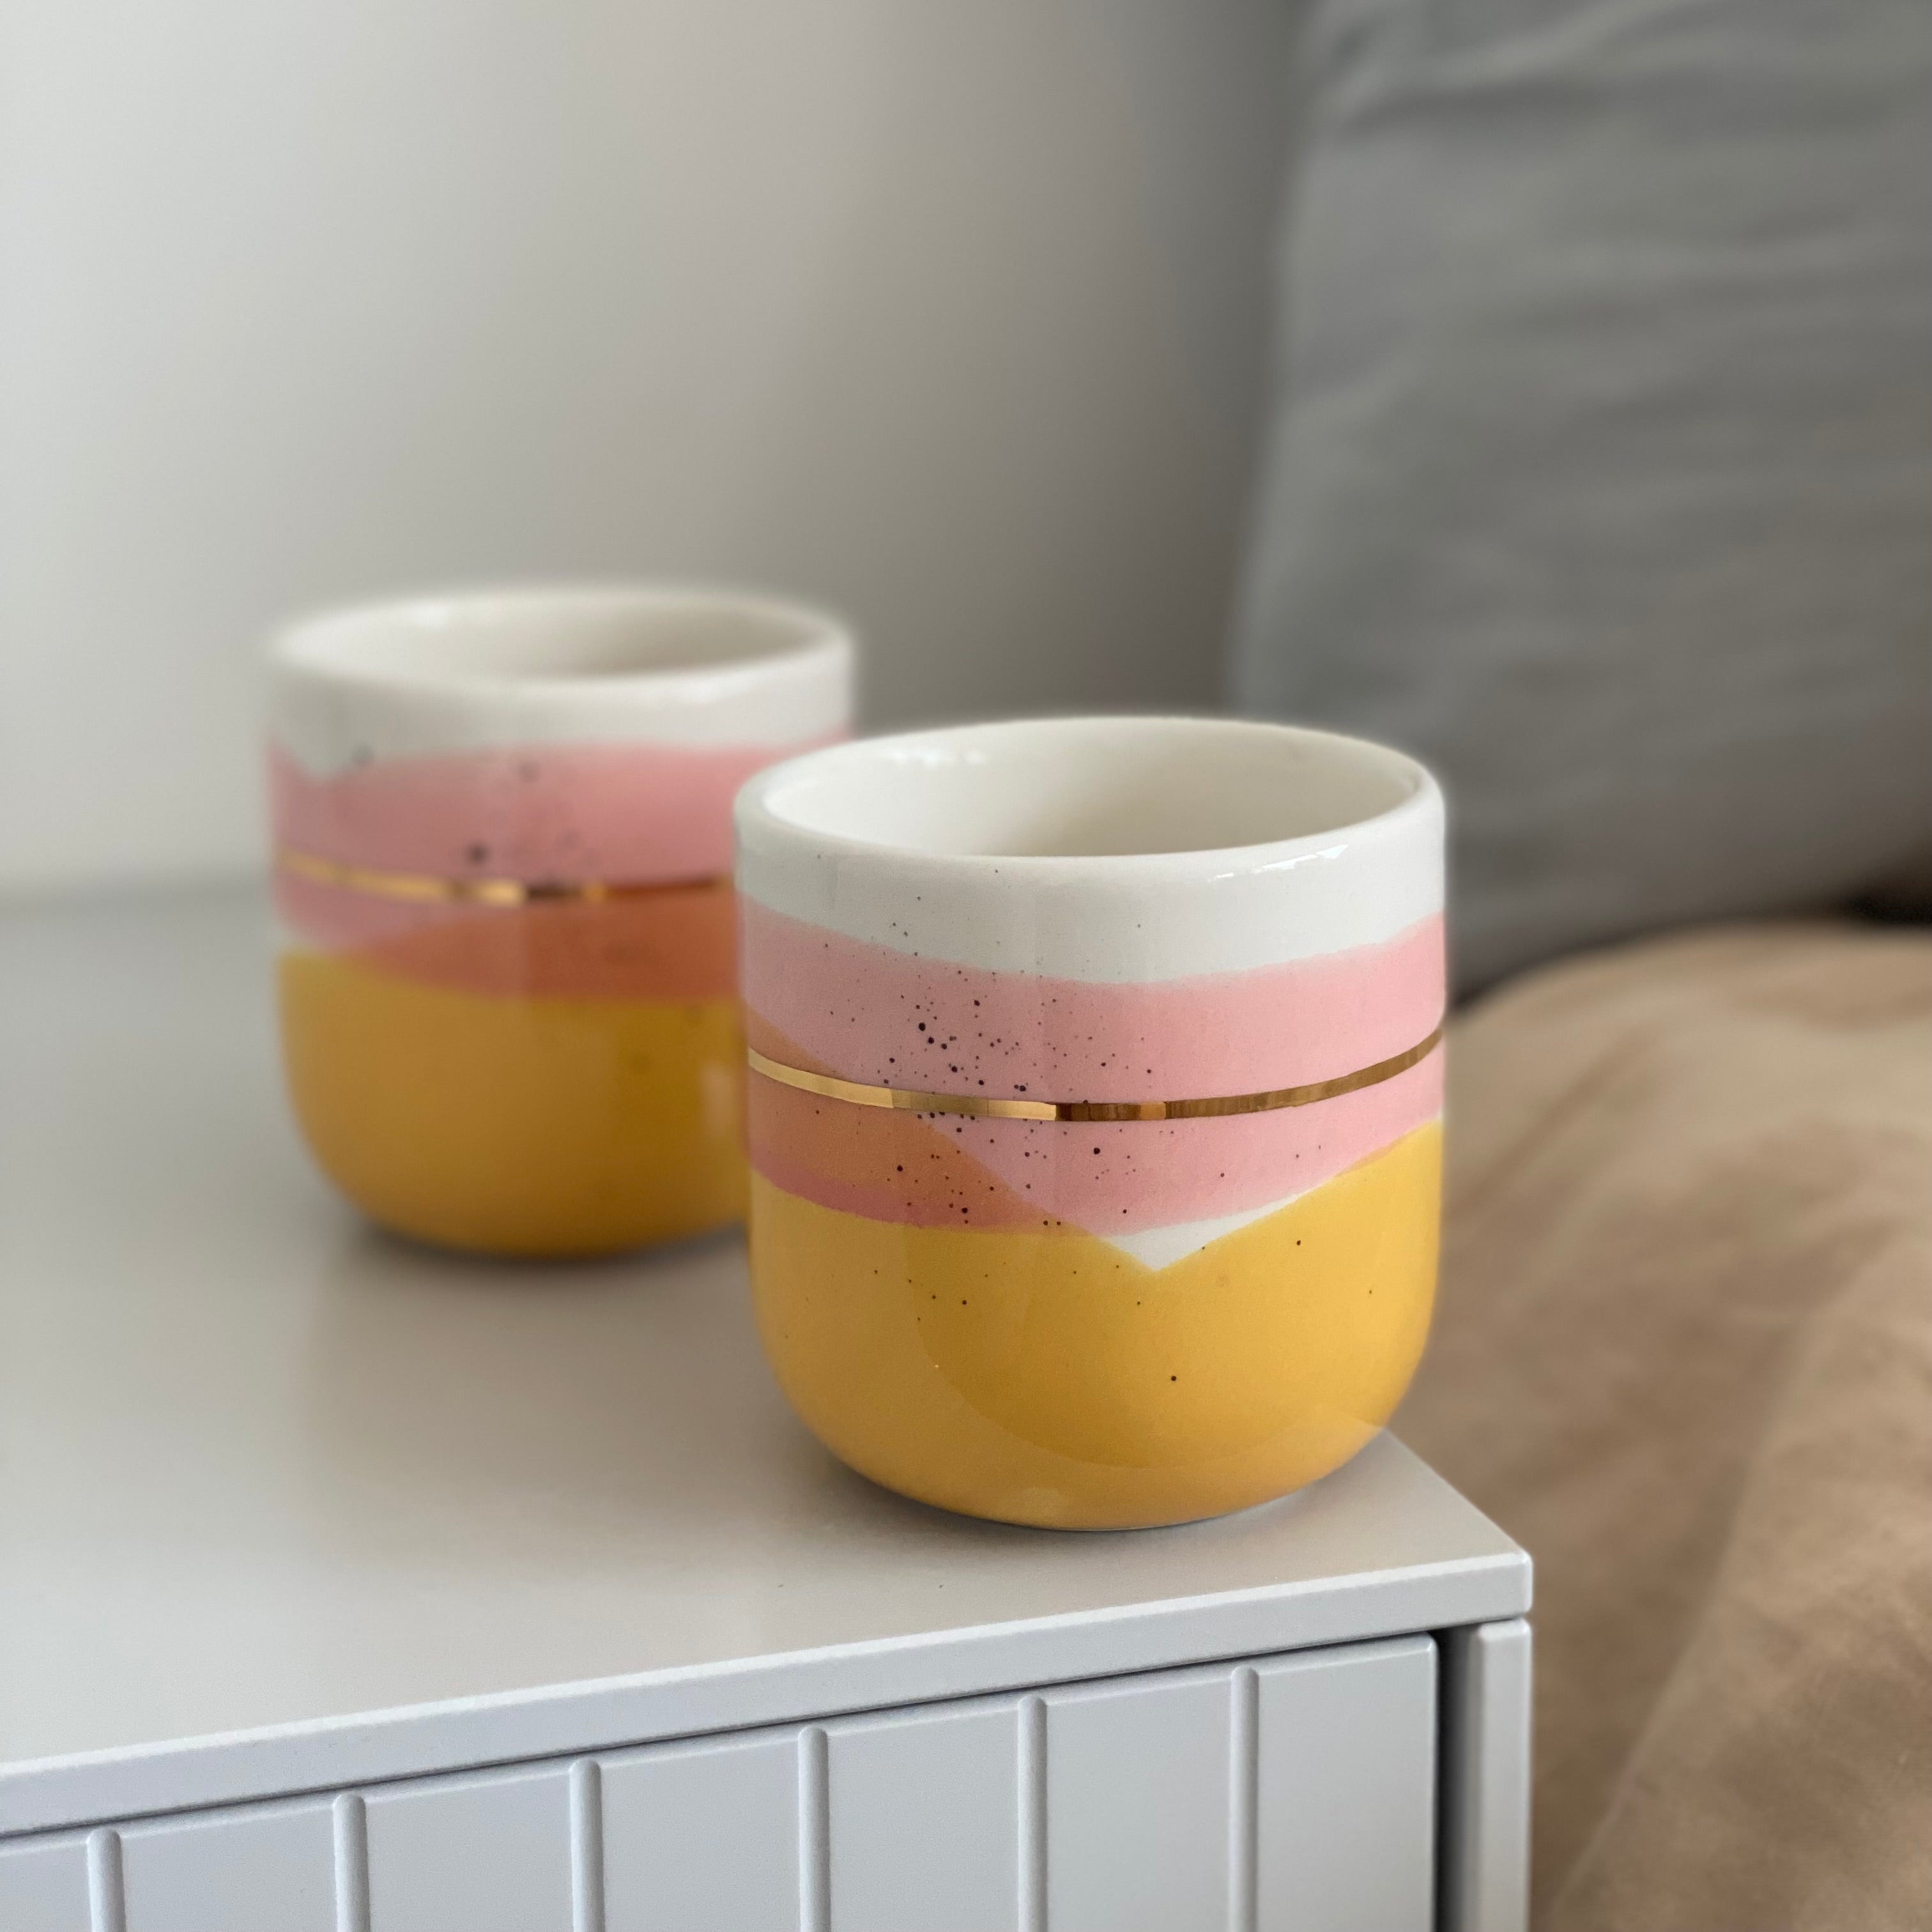 Marinski Heartmades latte kop Landscape - warm yellow og coral pink